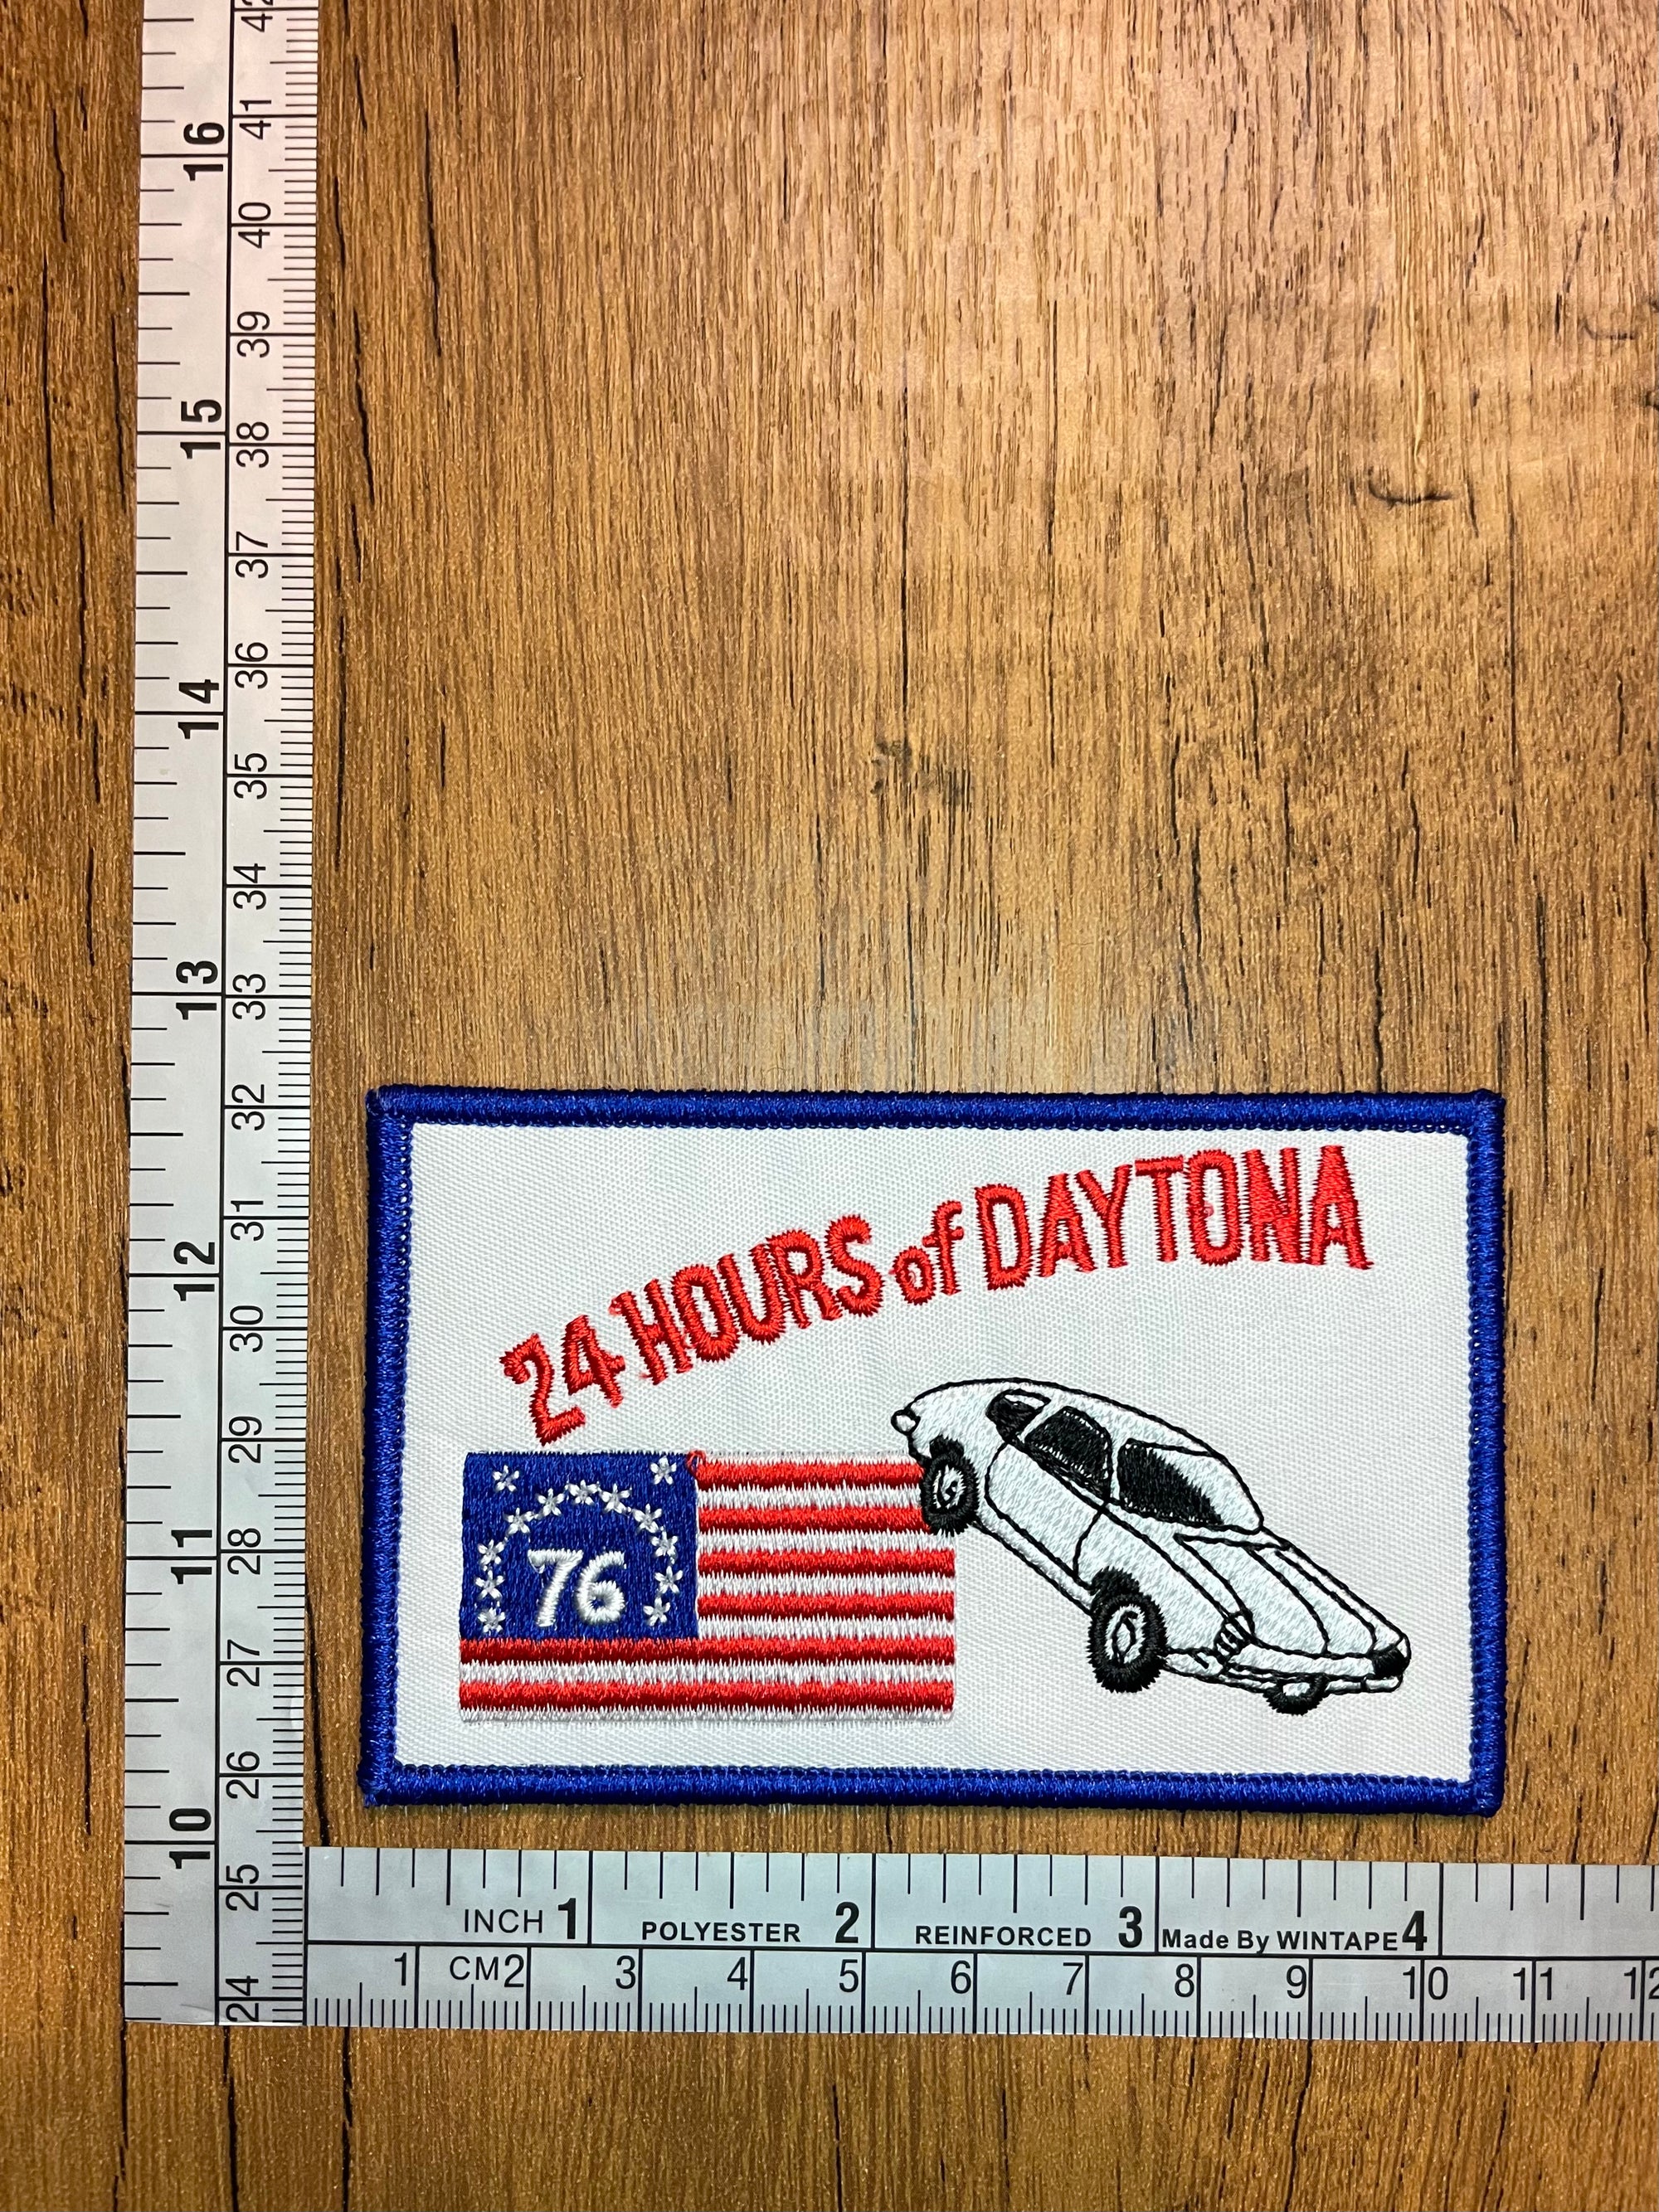 24 Hours of Daytona